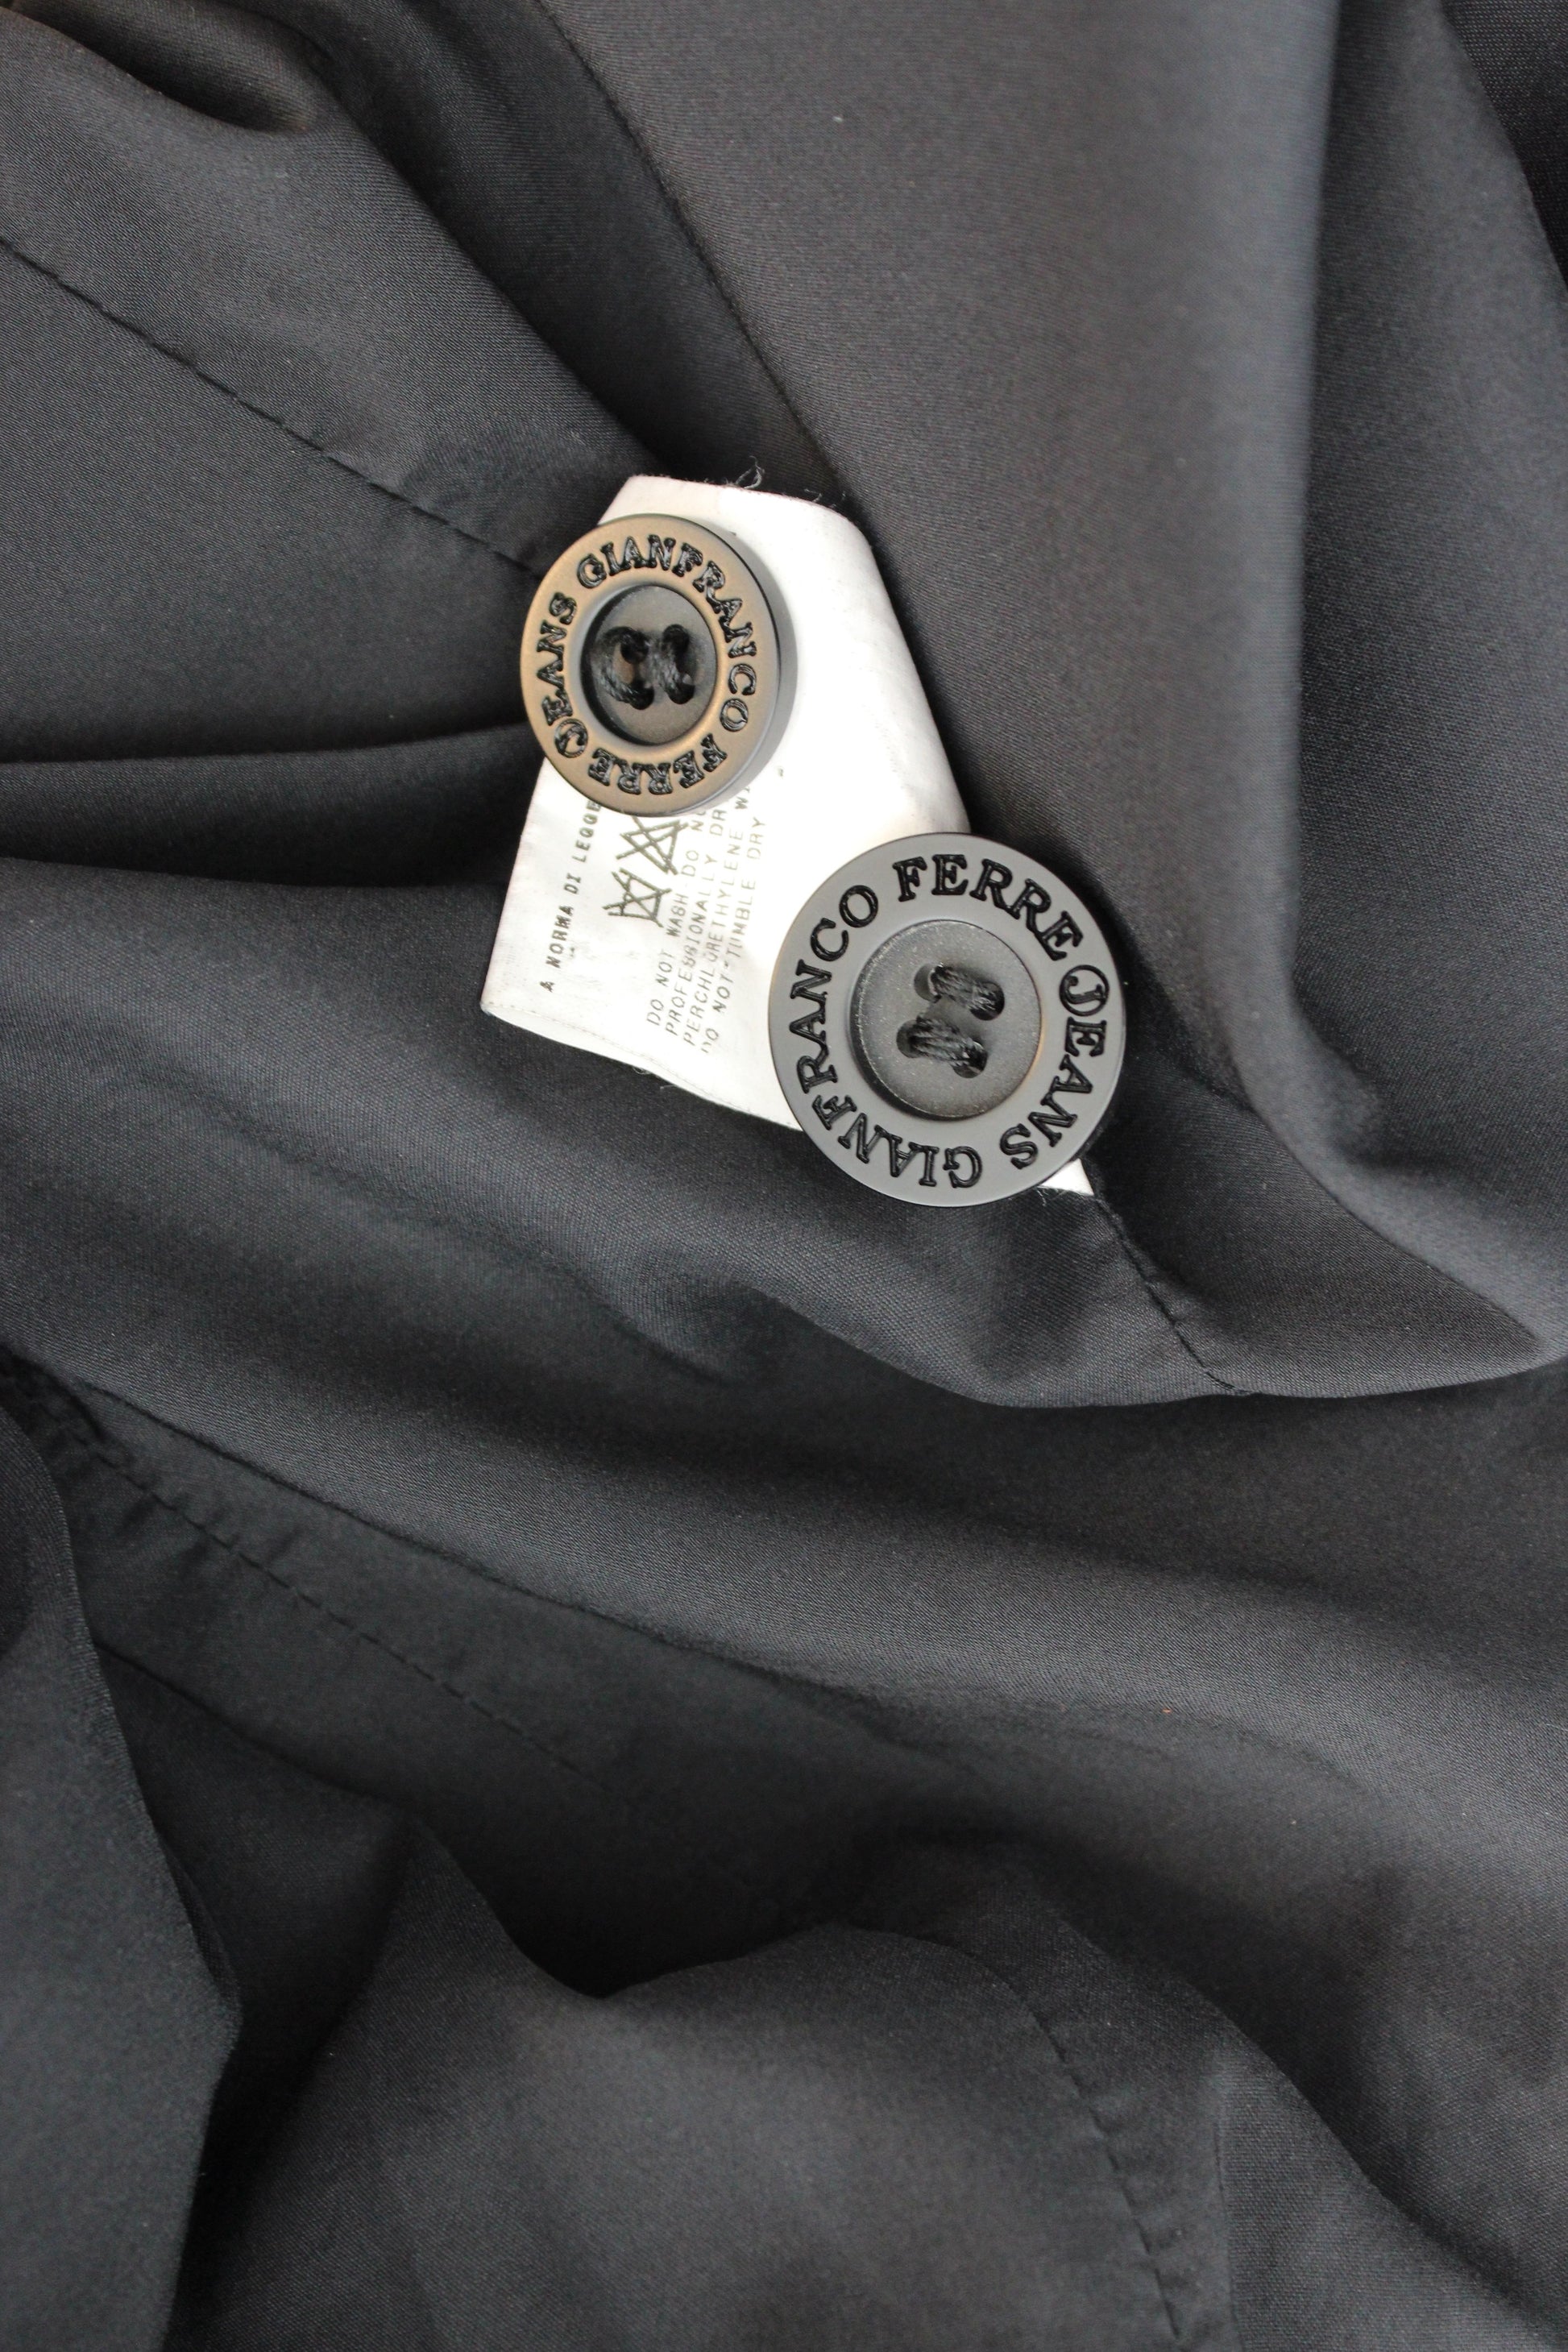 P007 Full Monogram Black on Garmentory  Fitted denim jacket, Denim jacket,  Denim